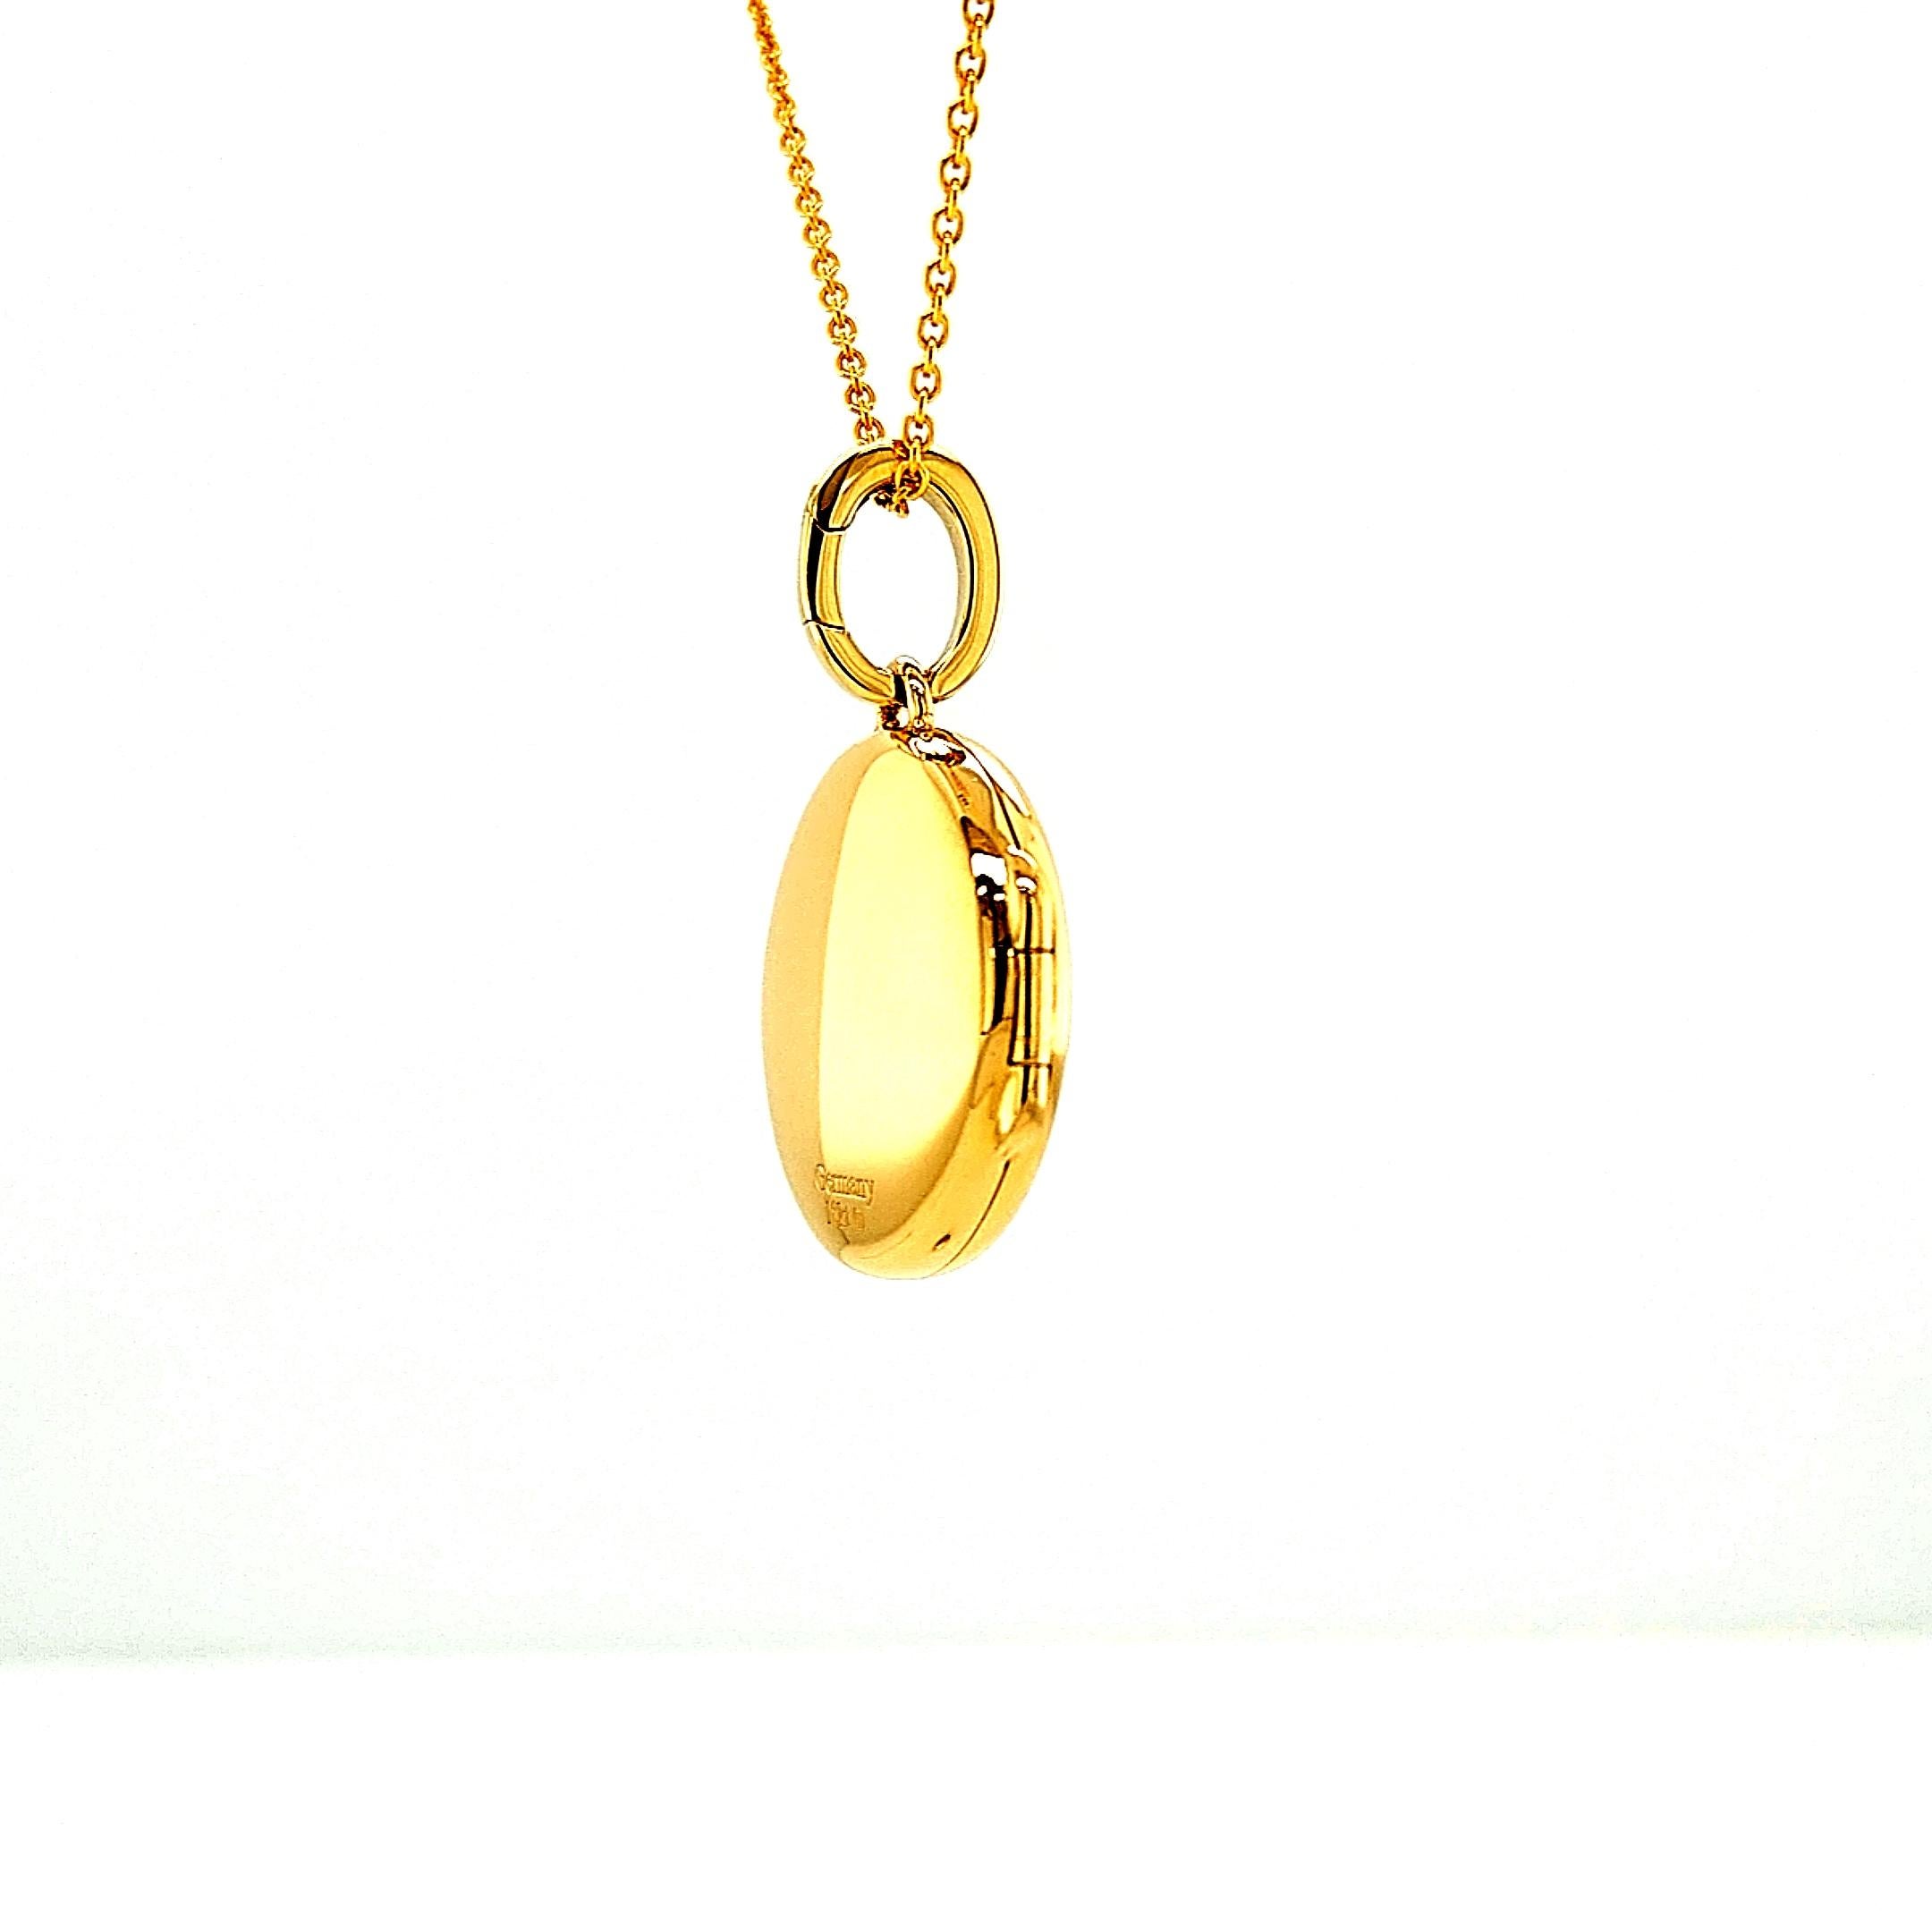 Women's Customizable Round Polished Pendant Locket - 18k Yellow Gold - Diameter 26.0 mm For Sale